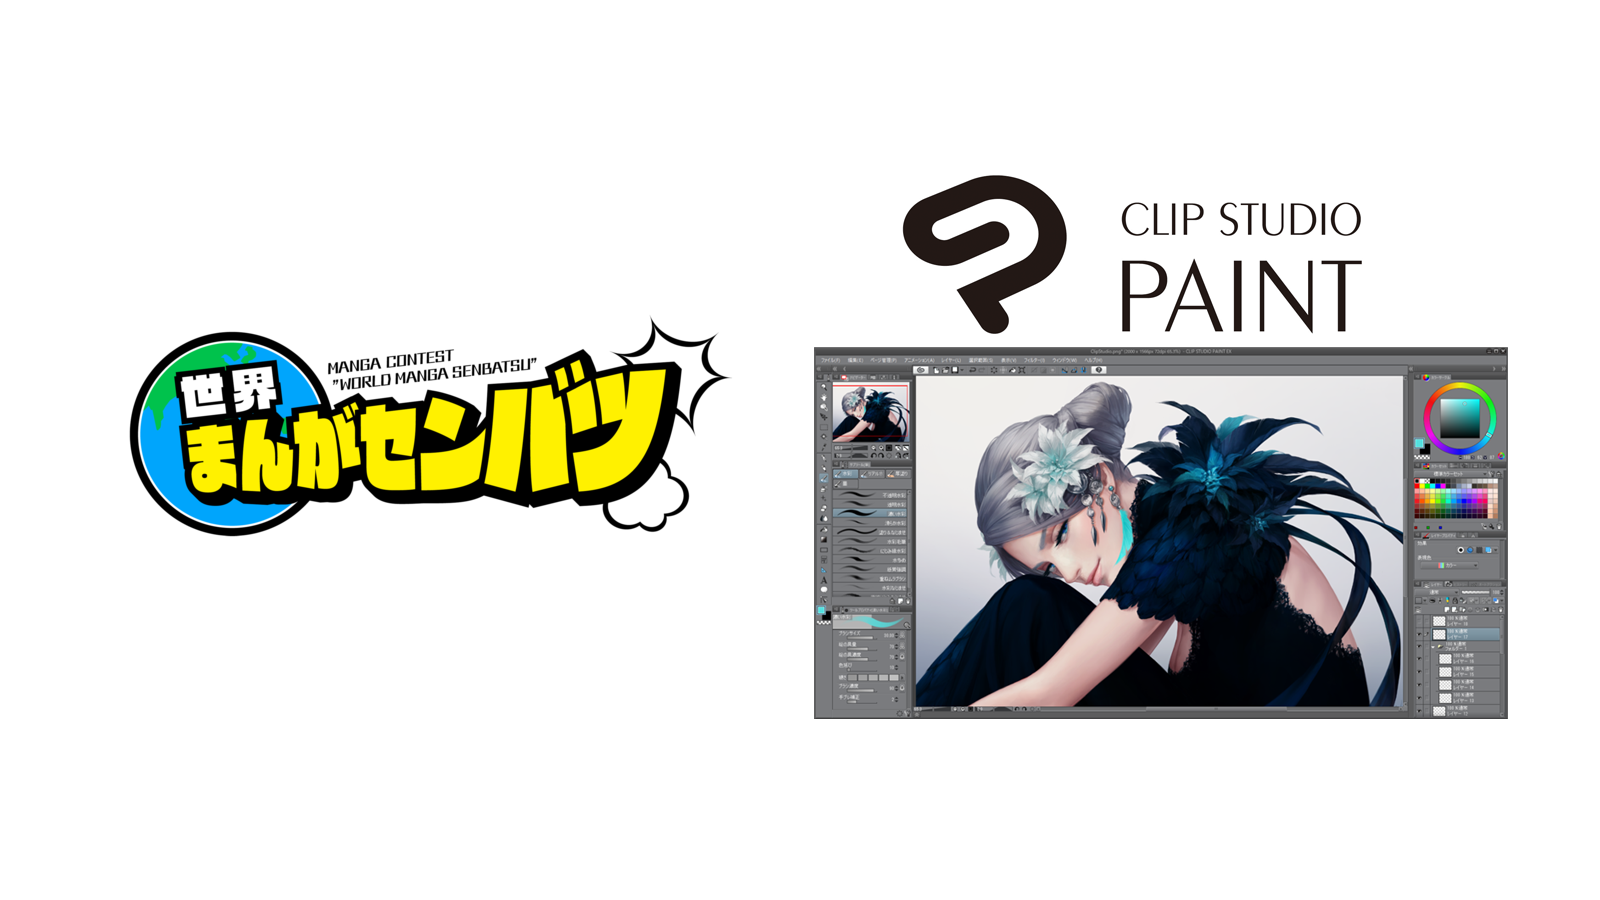 “Clip Studio Paint” sponsors worldwide creator contest “World Manga Senbatsu”;  presents free 3-month Clip Studio Paint EX licenses to applicants.